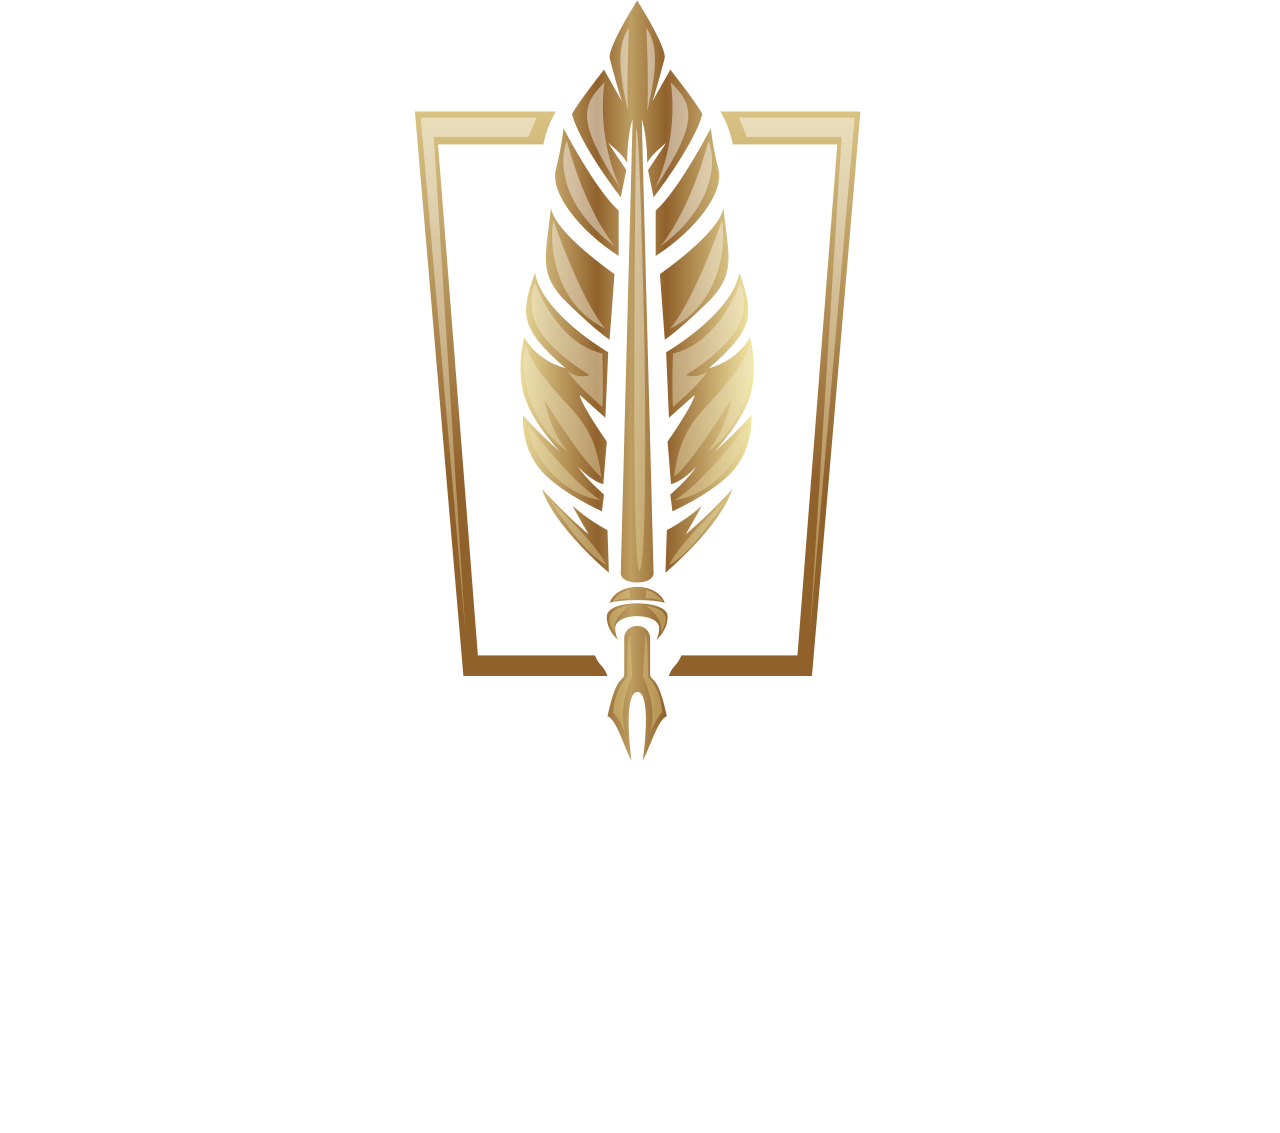 DC Tax Firm's logo